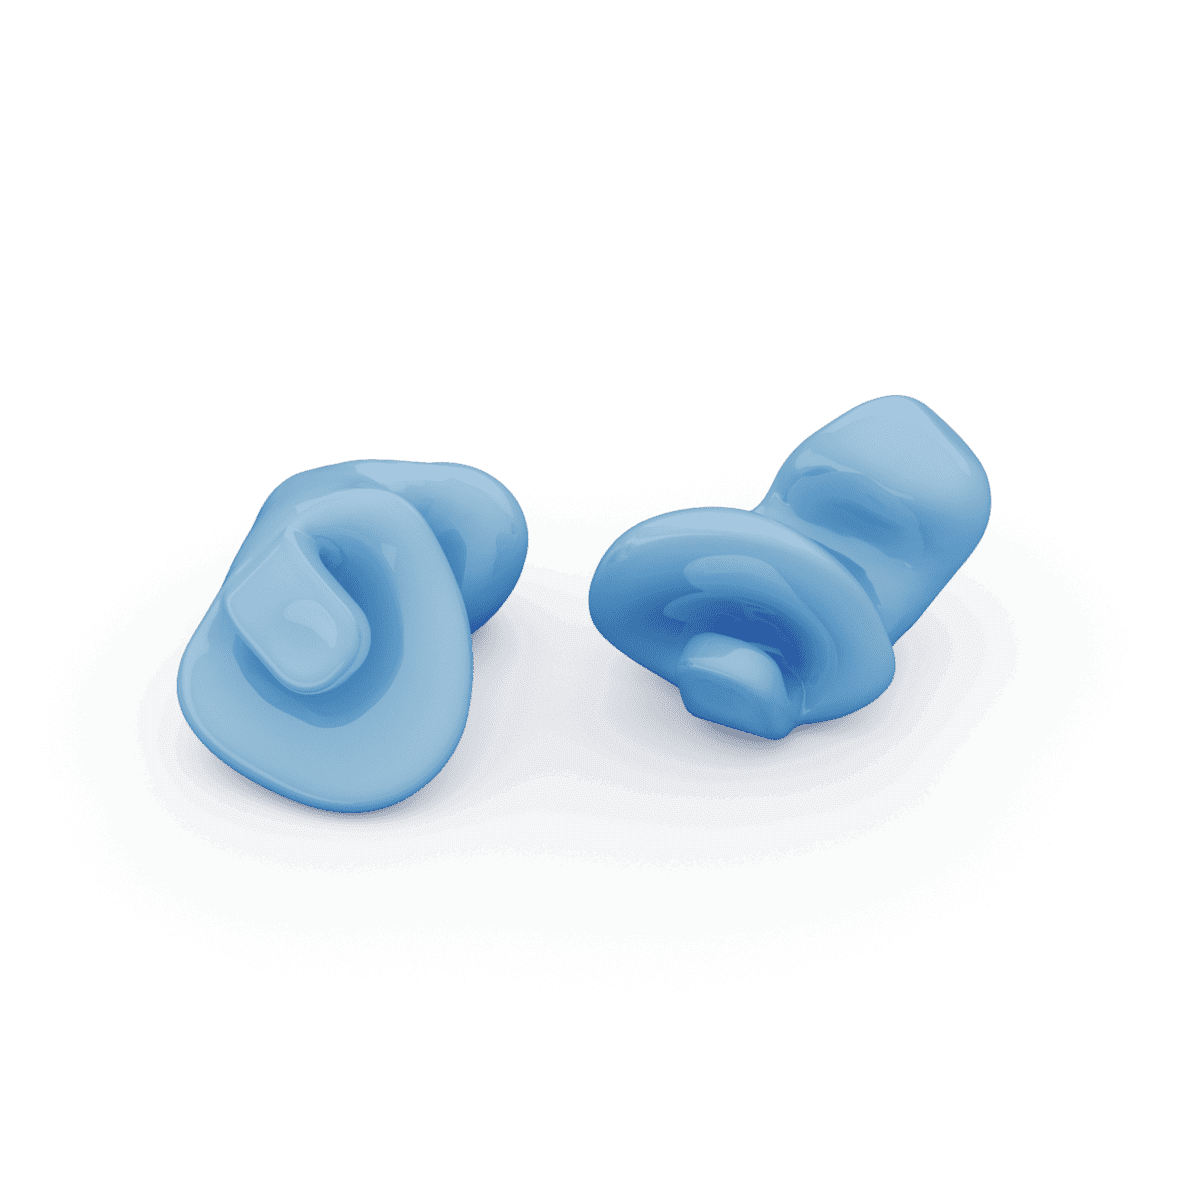 Serenity Choice blue ear plugs for sleeping